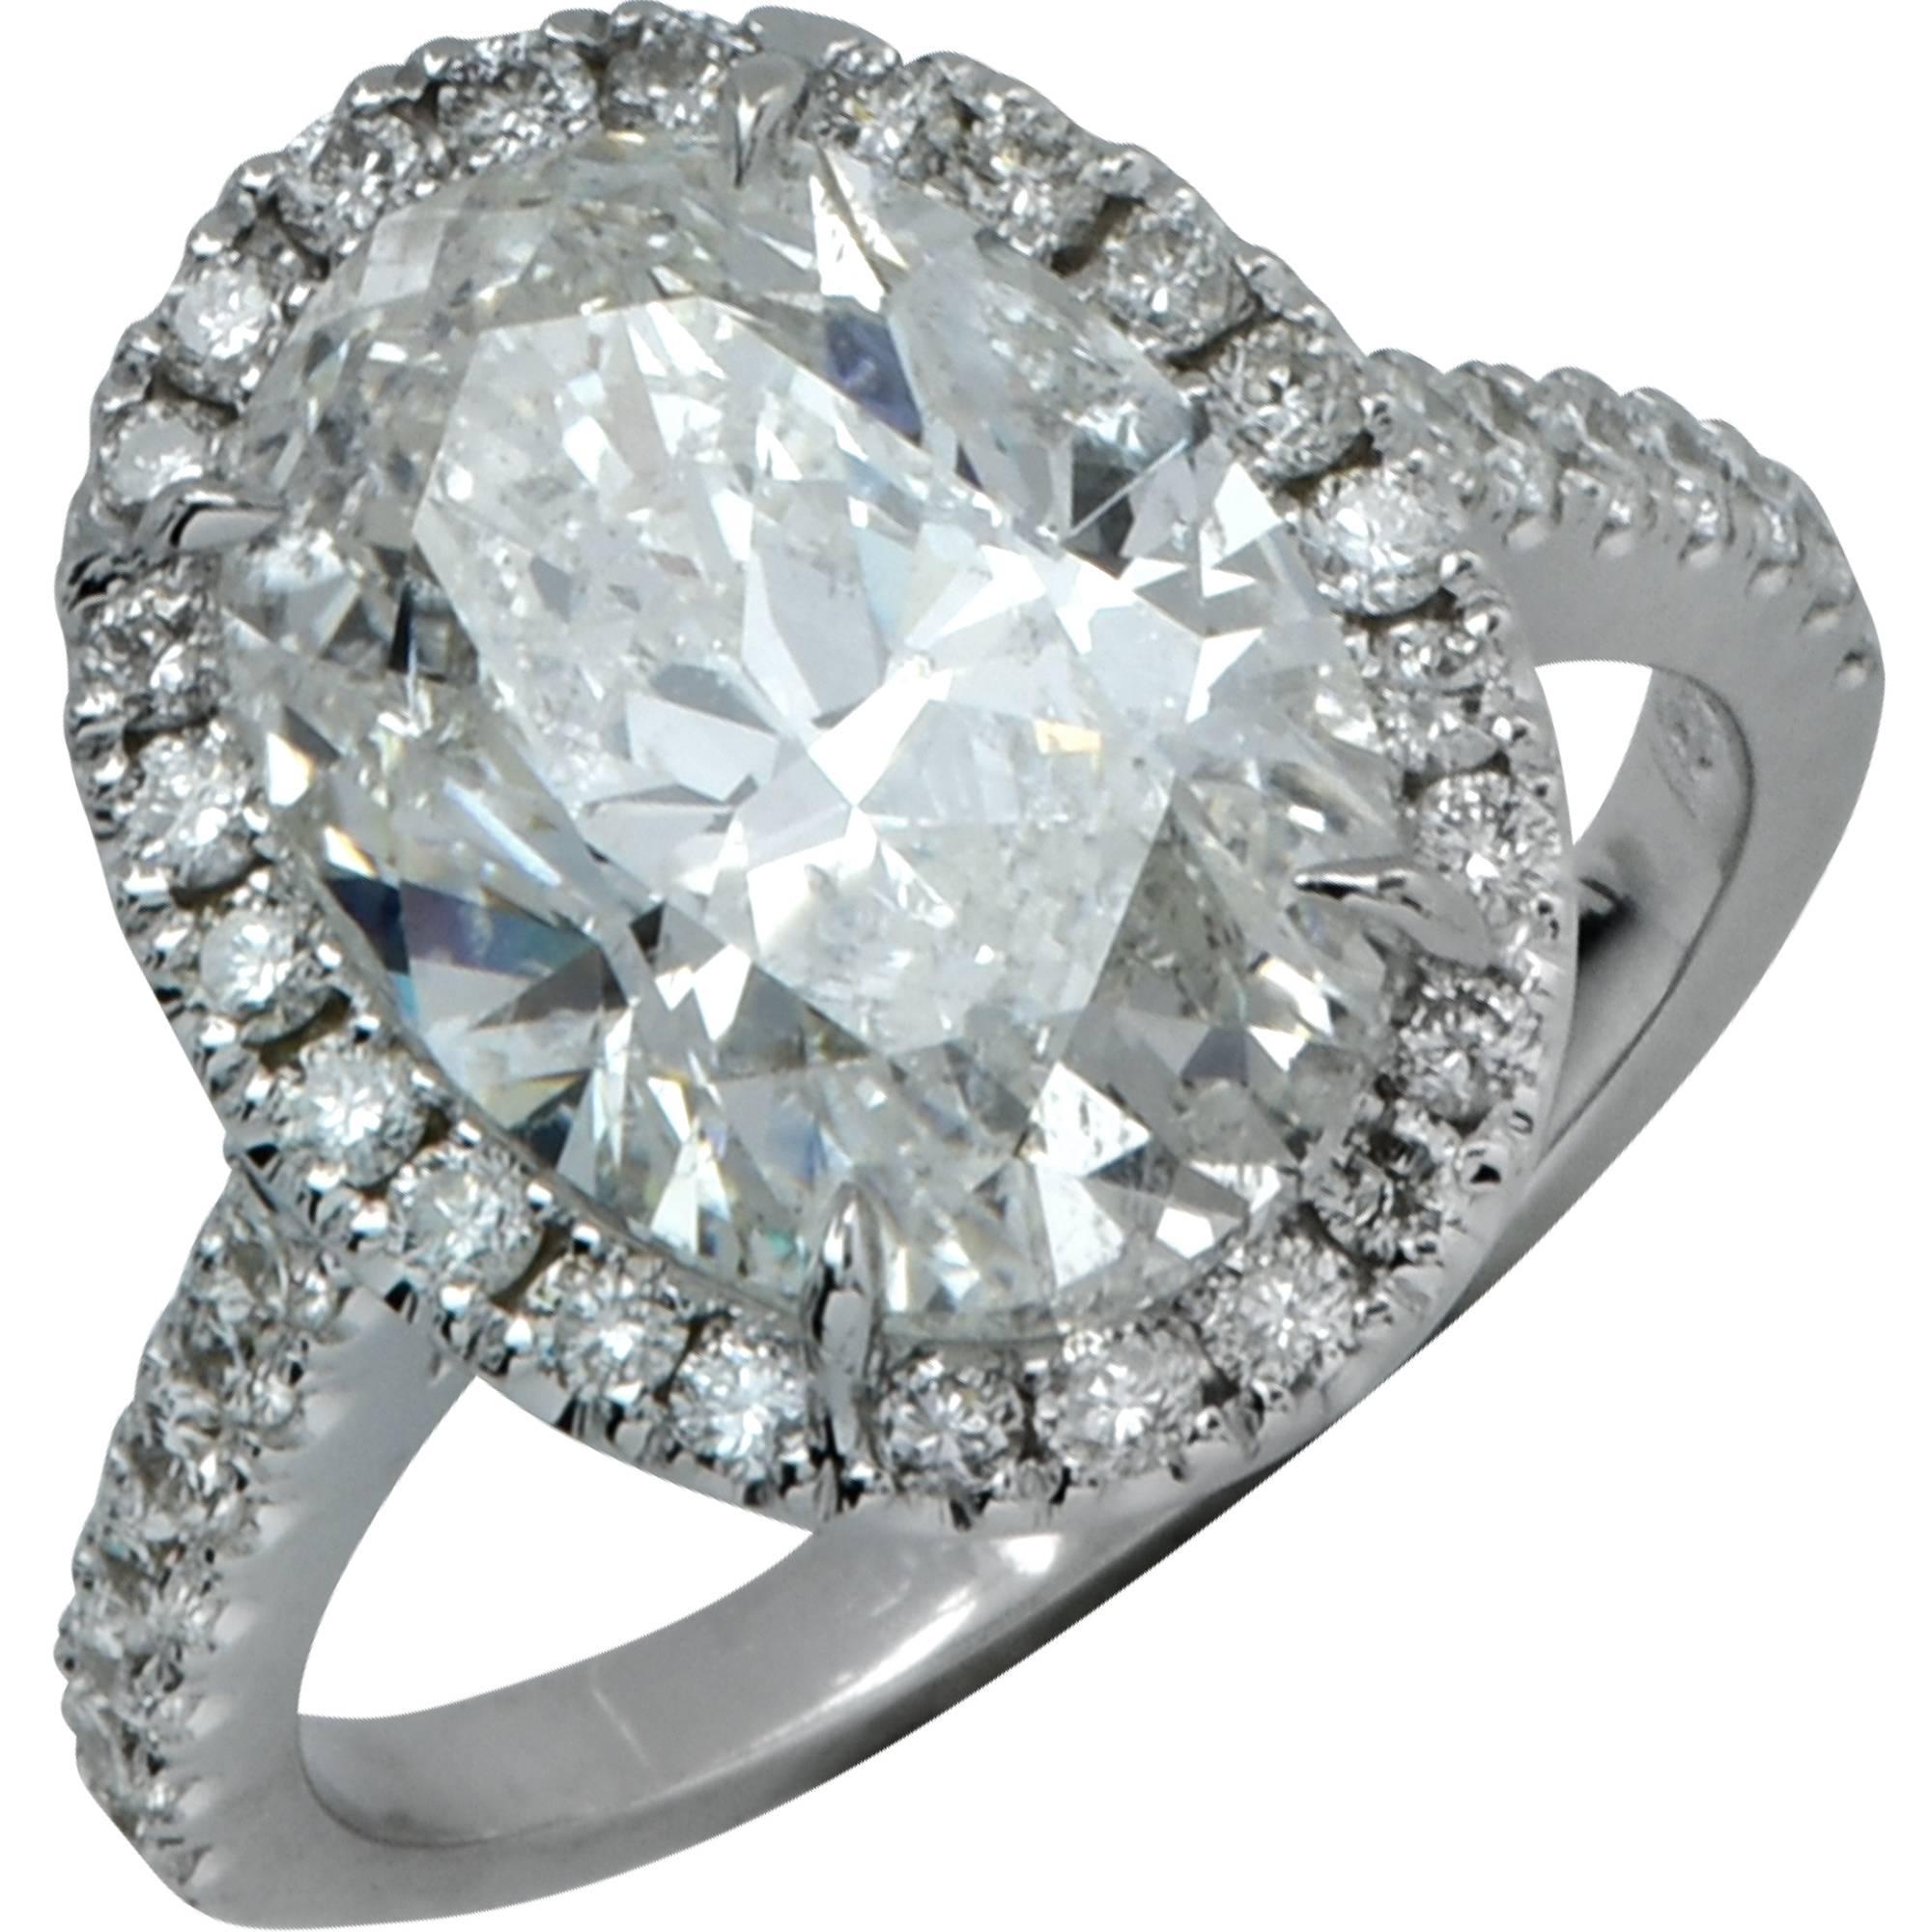 5.02 Carat Oval Cut Diamond Halo Engagement Ring